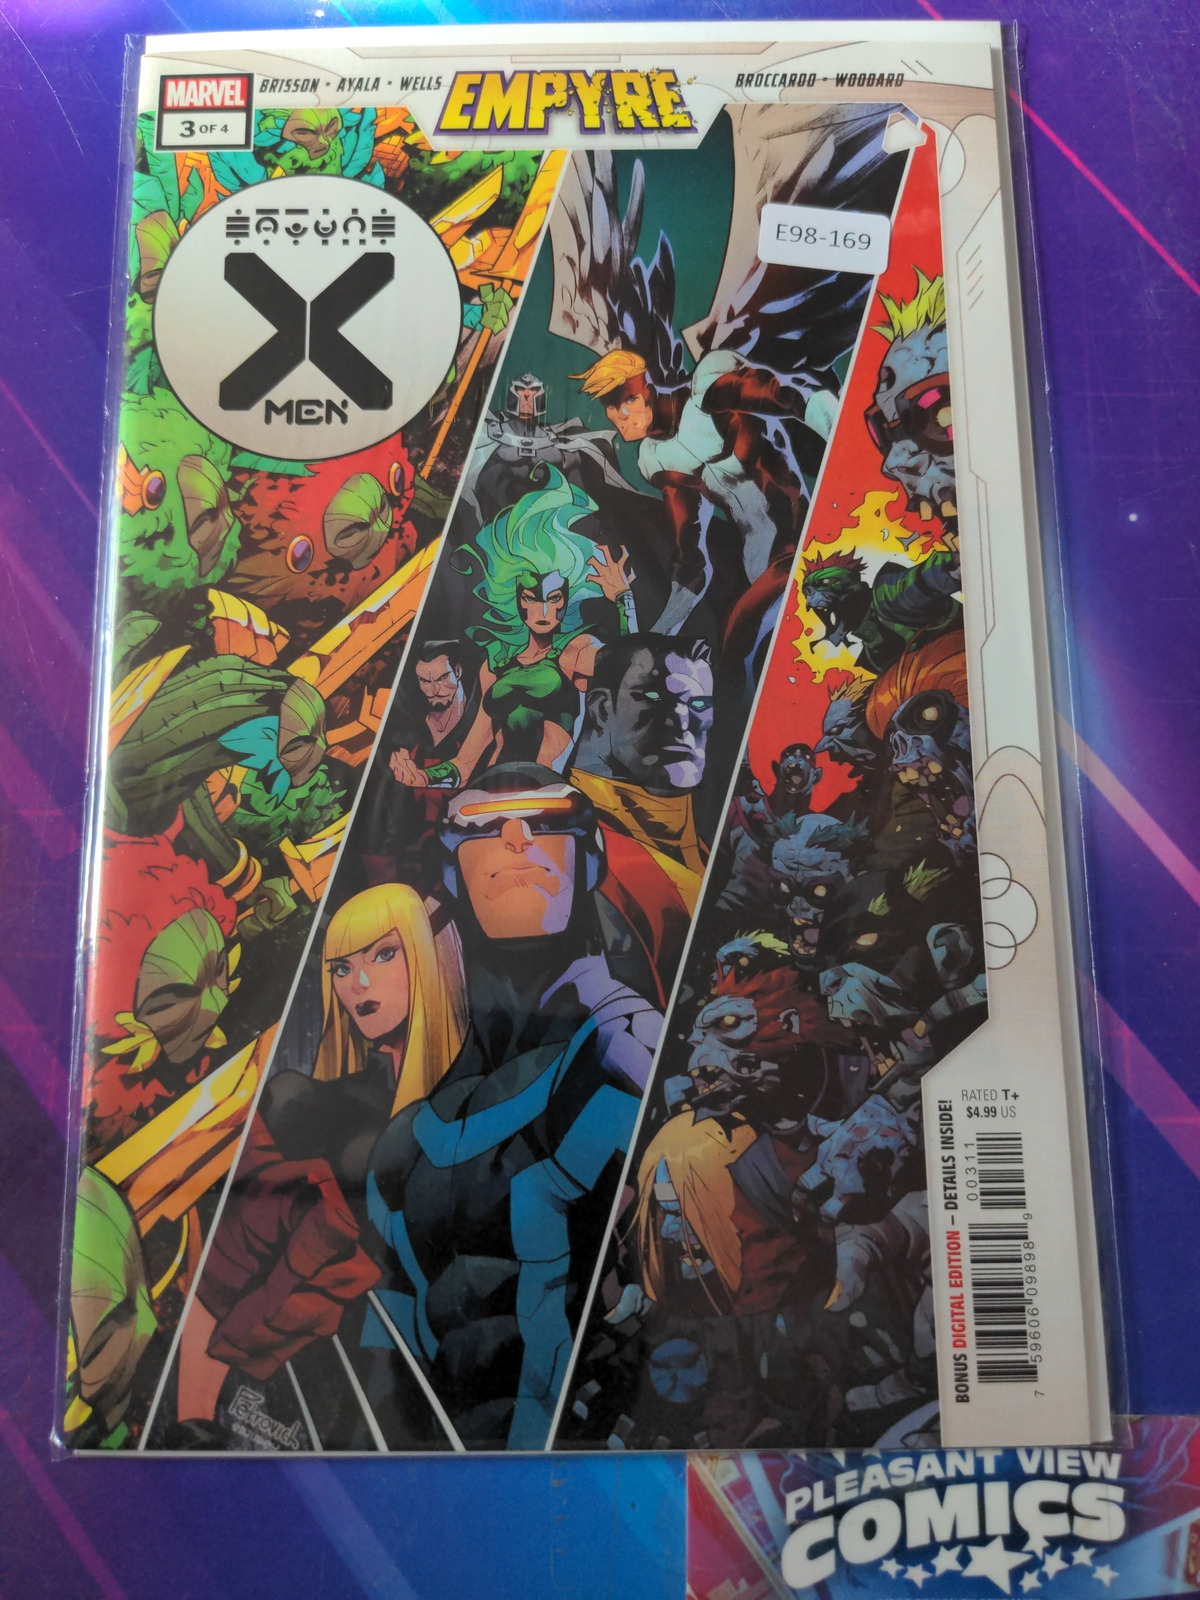 EMPYRE: X-MEN #3 MINI HIGH GRADE MARVEL COMIC BOOK E98-169